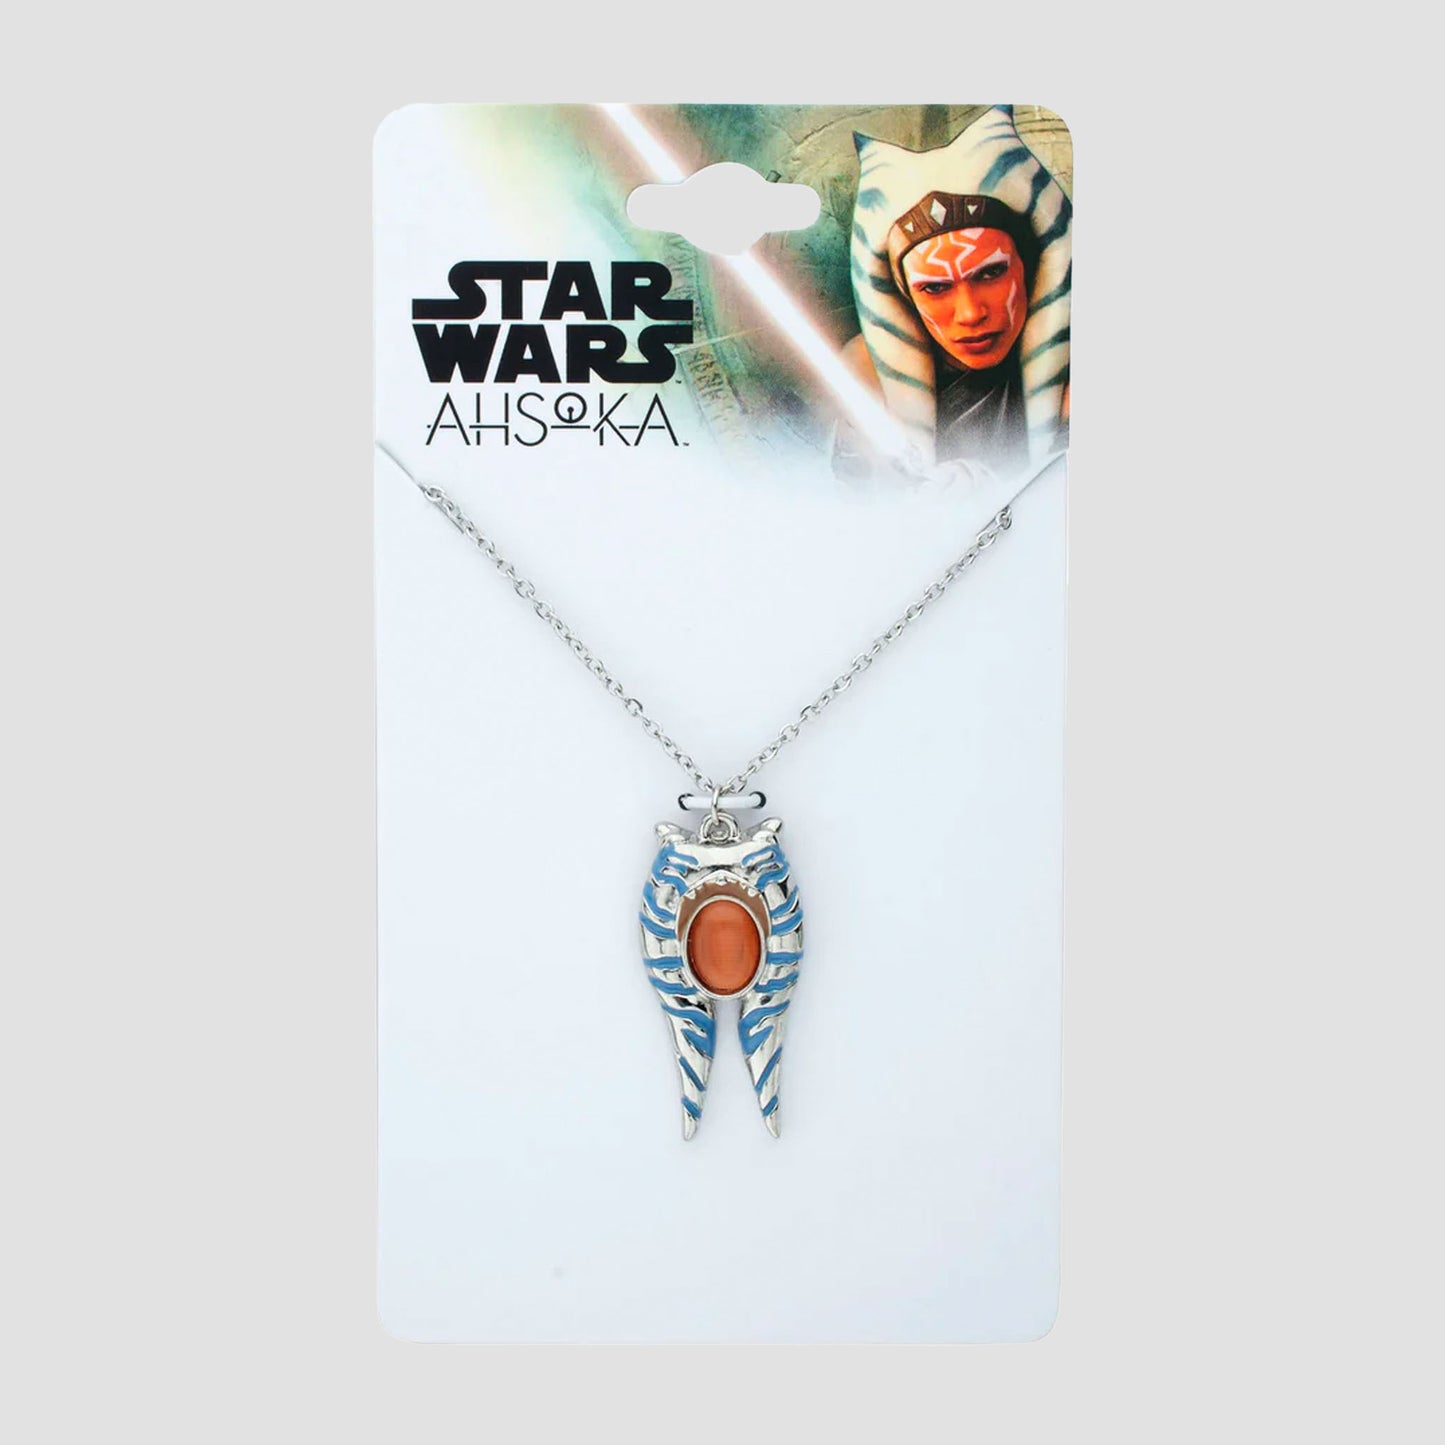 Ahsoka's Lekku (Star Wars: Ahsoka) Pendant Necklace